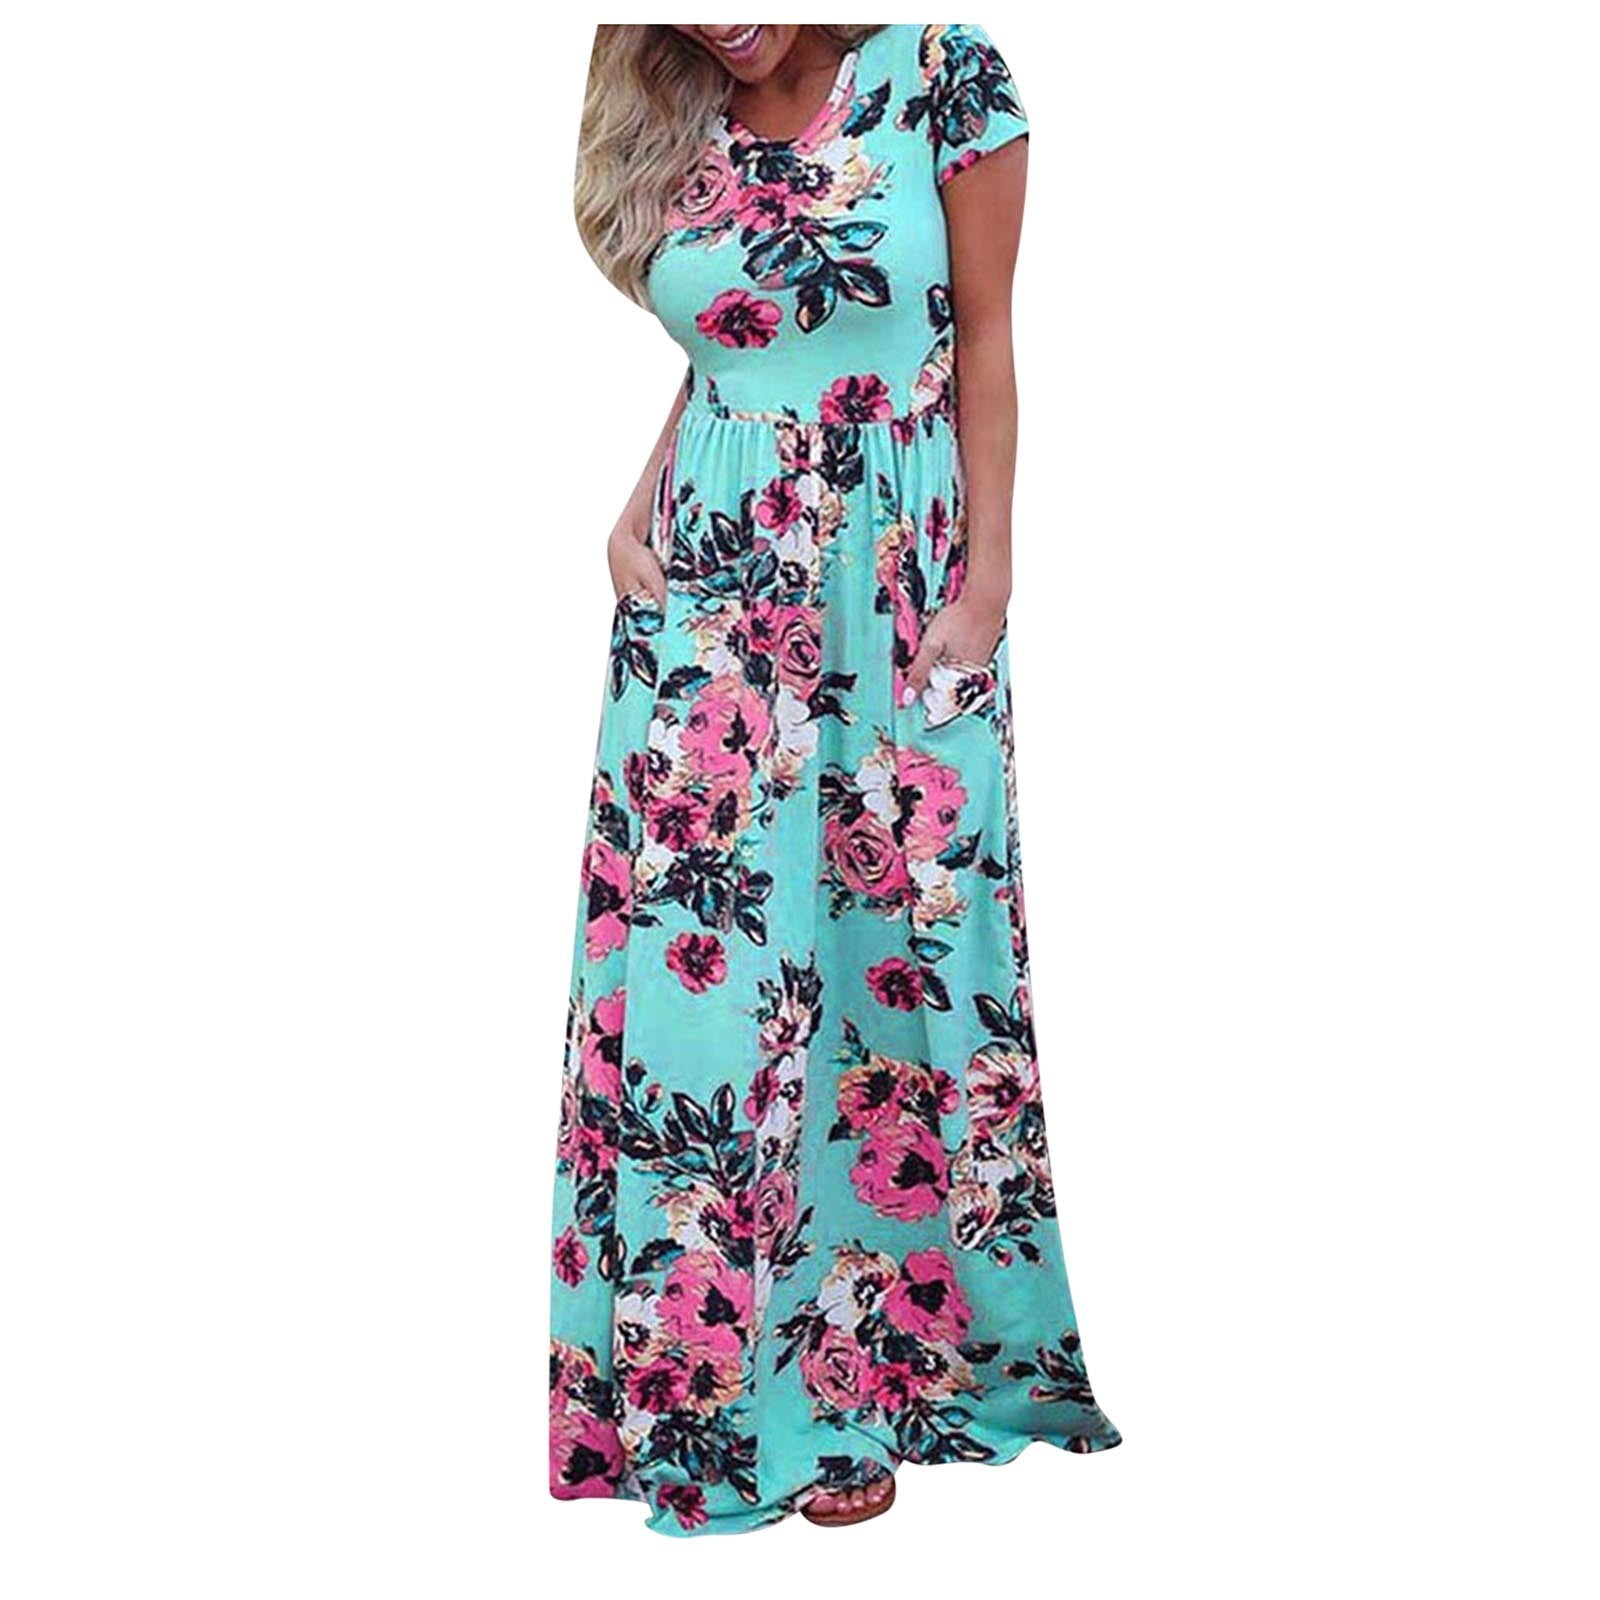 Toyfunny Women's Casual Floral Printed Dress Short Sleeve Maxi Dress ...